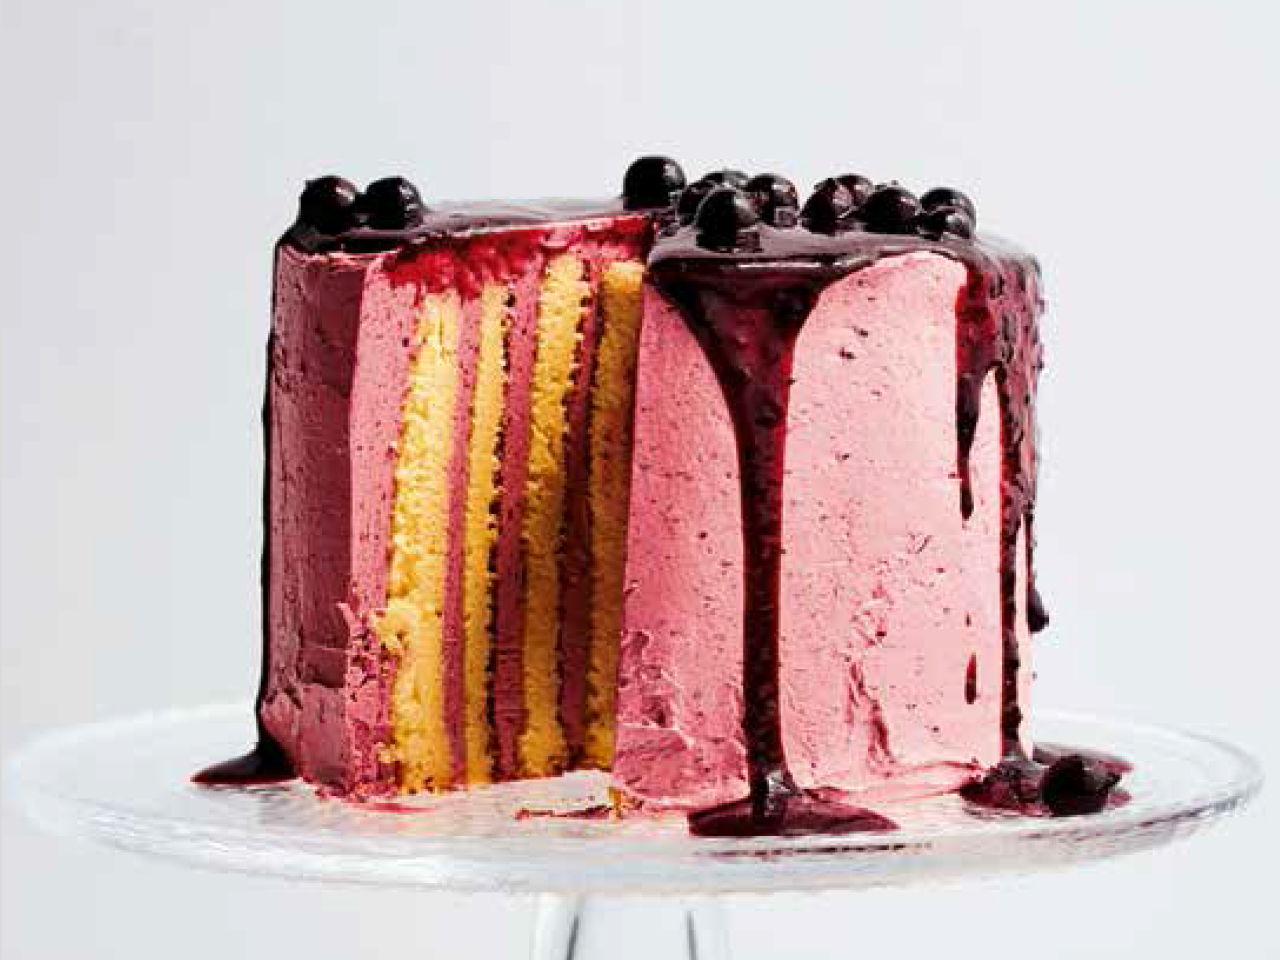 Lemon and blackcurrant stripe cake